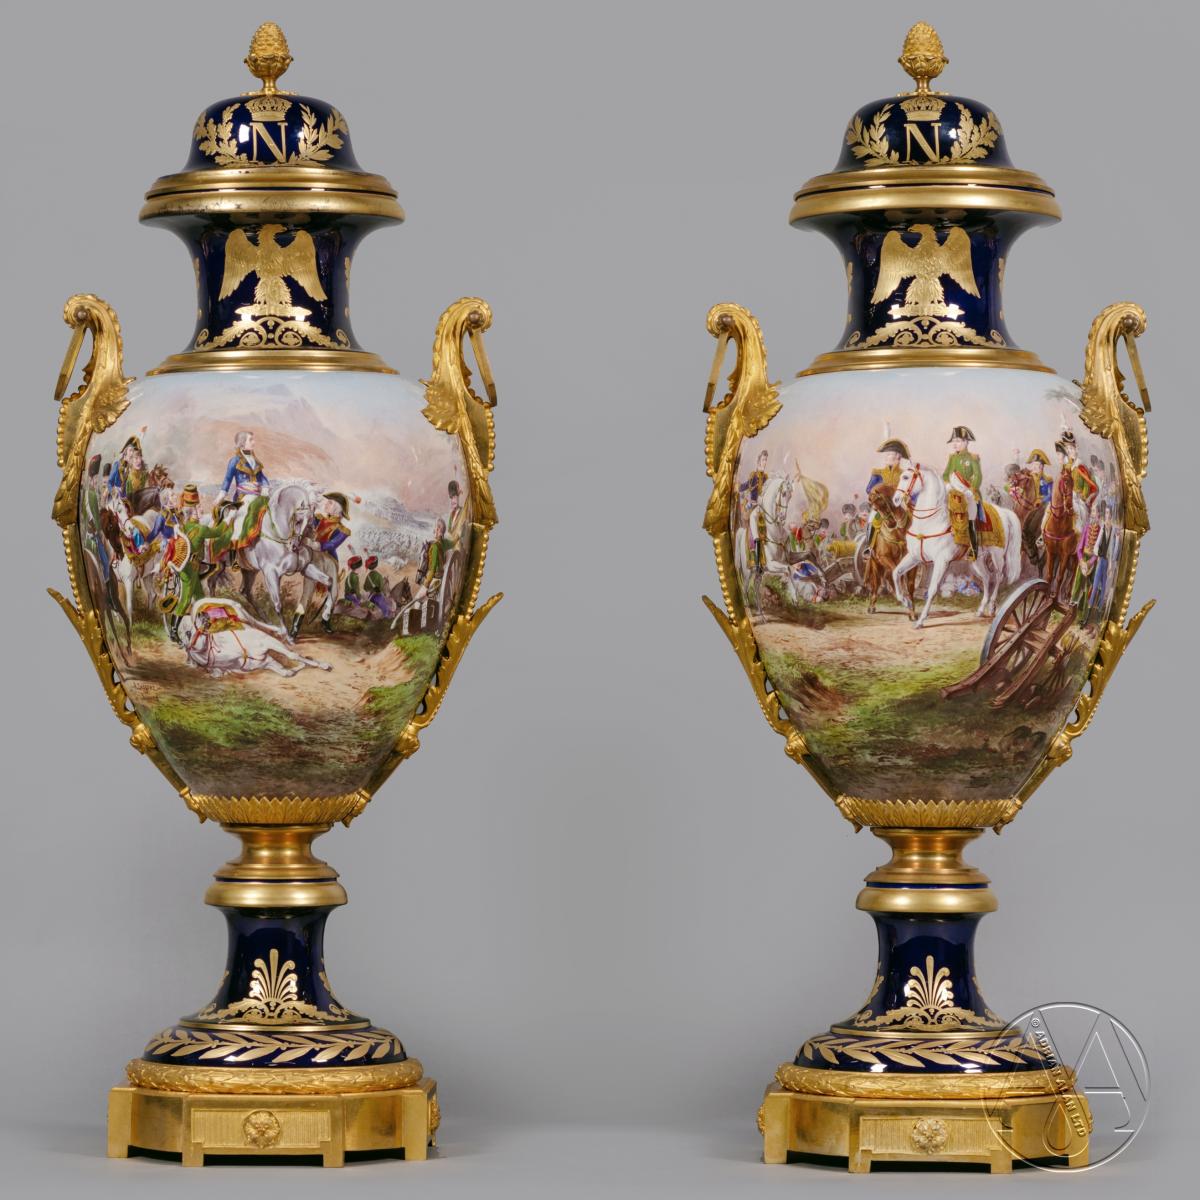 A Fine Pair of Sèvres-Style Napoleonic Gilt-Bronze Mounted Cobalt-Blue Ground Porcelain Vases